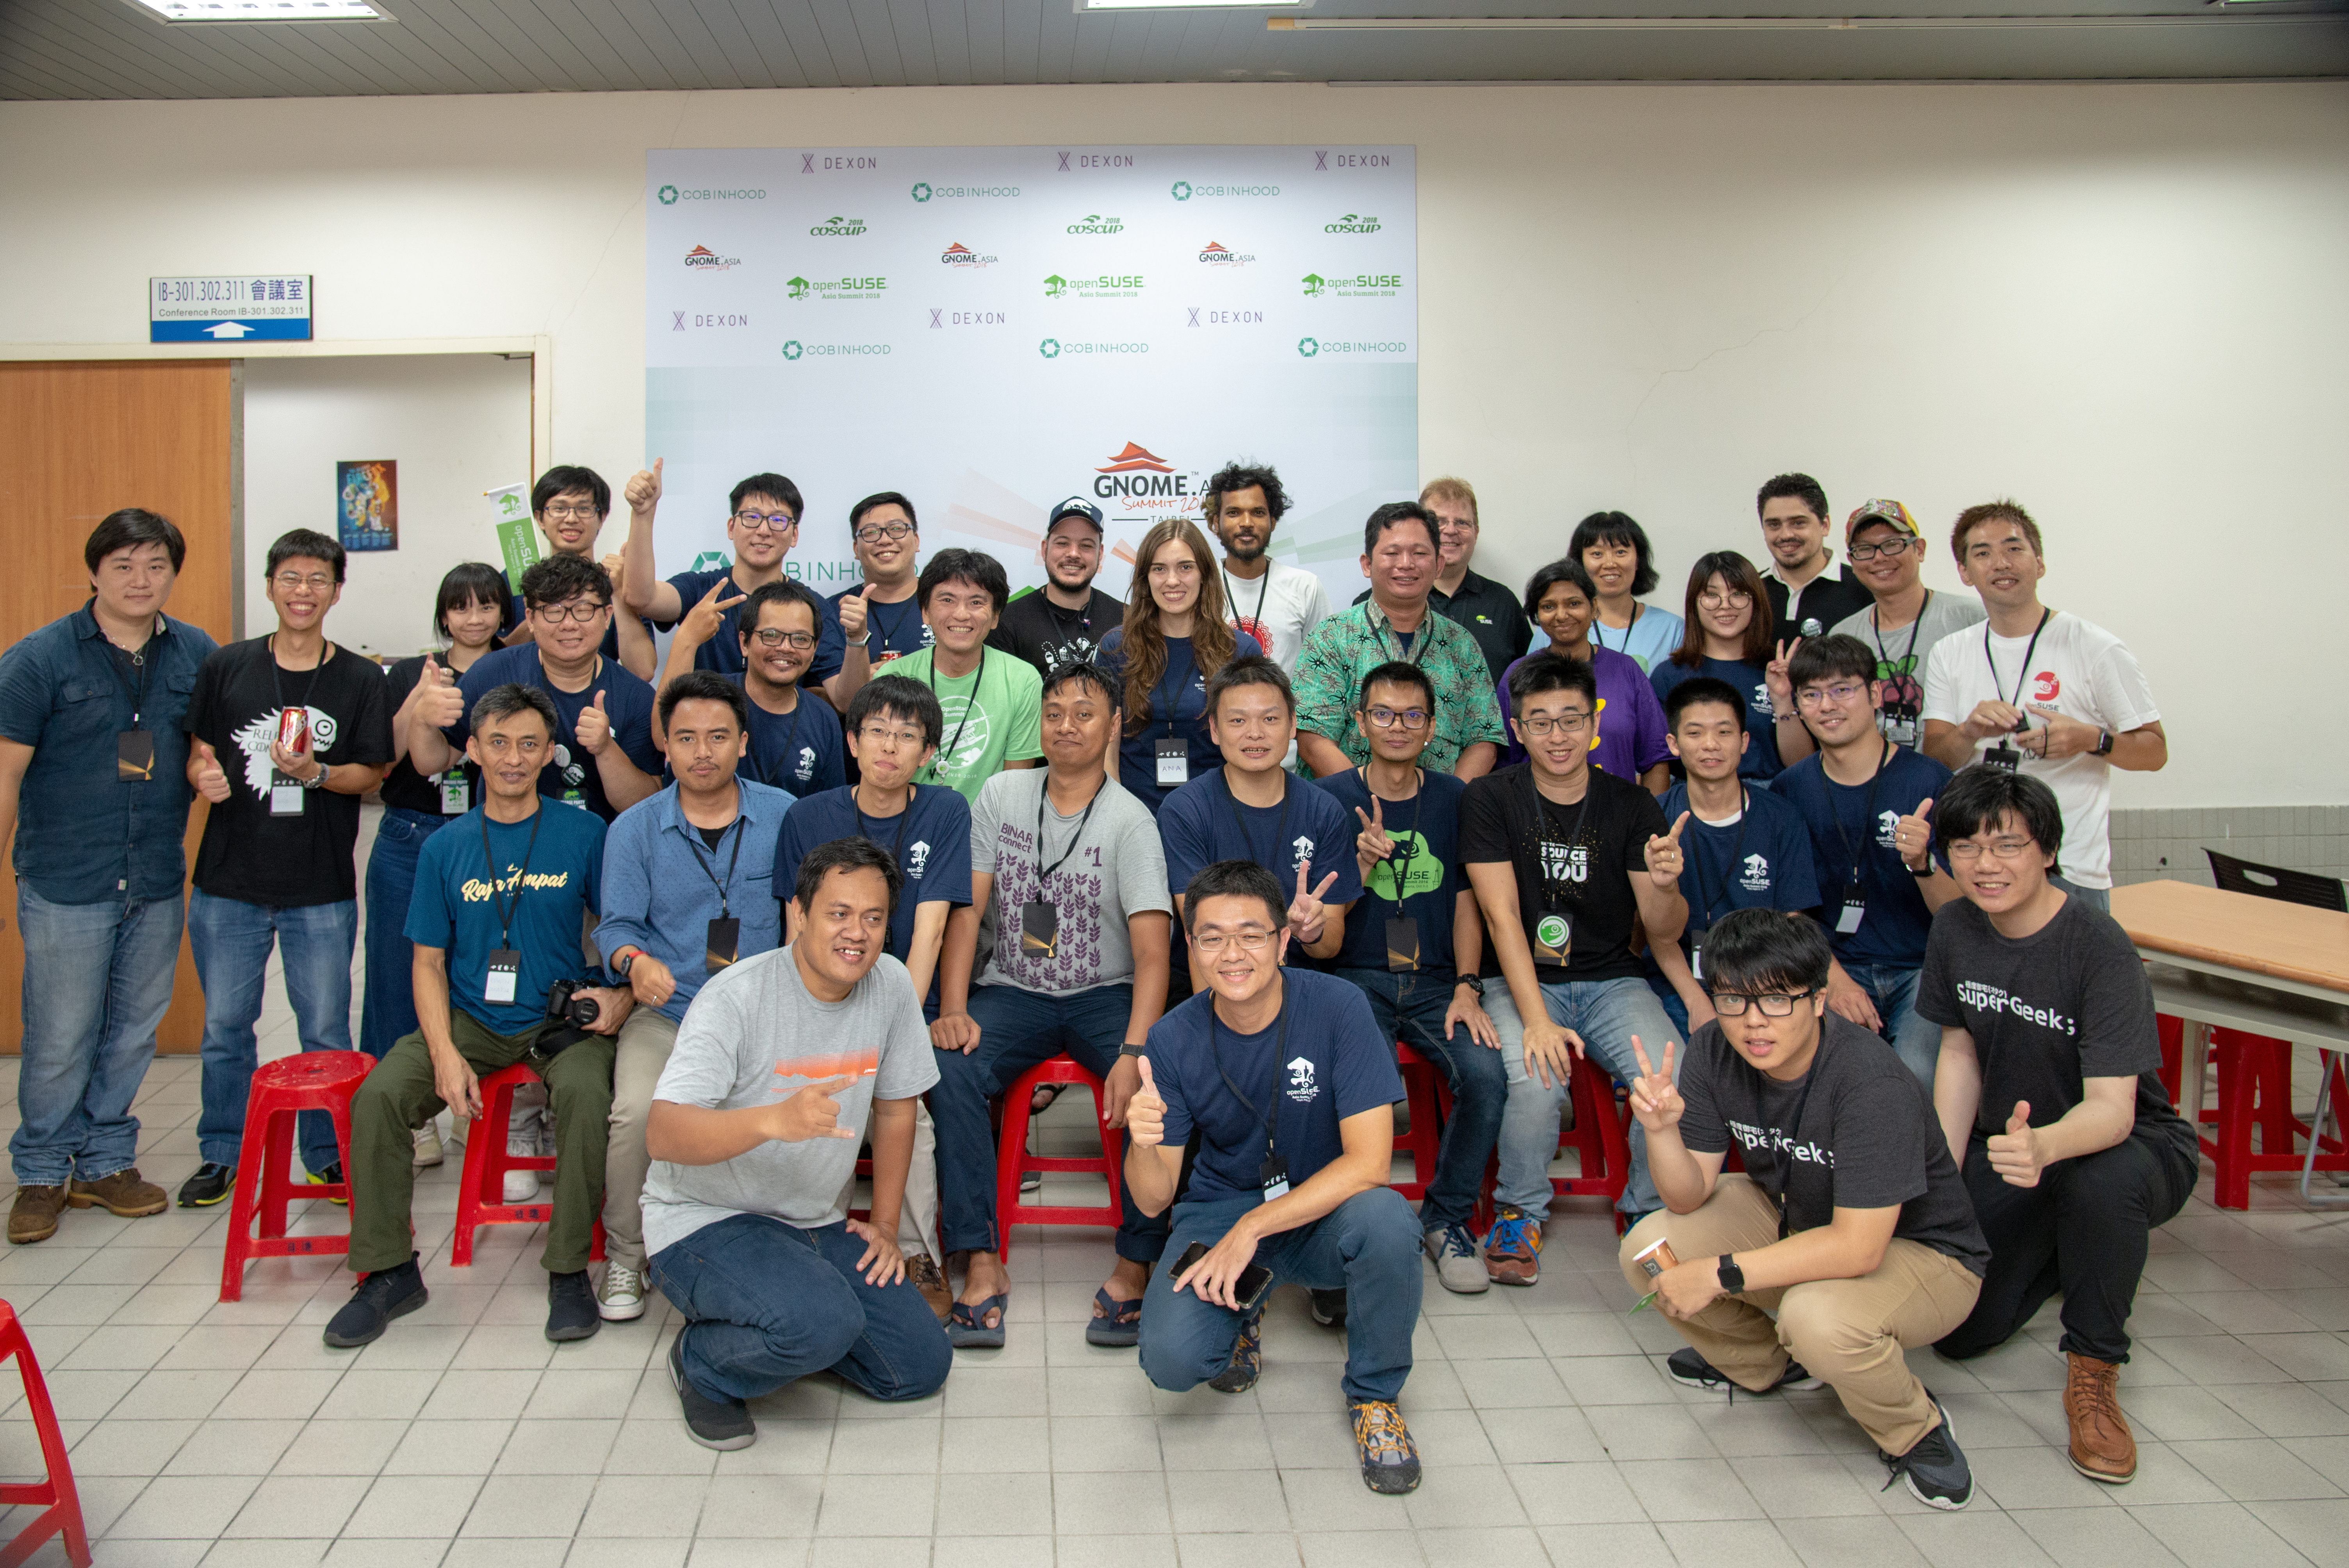 openSUSE.Asia Summit